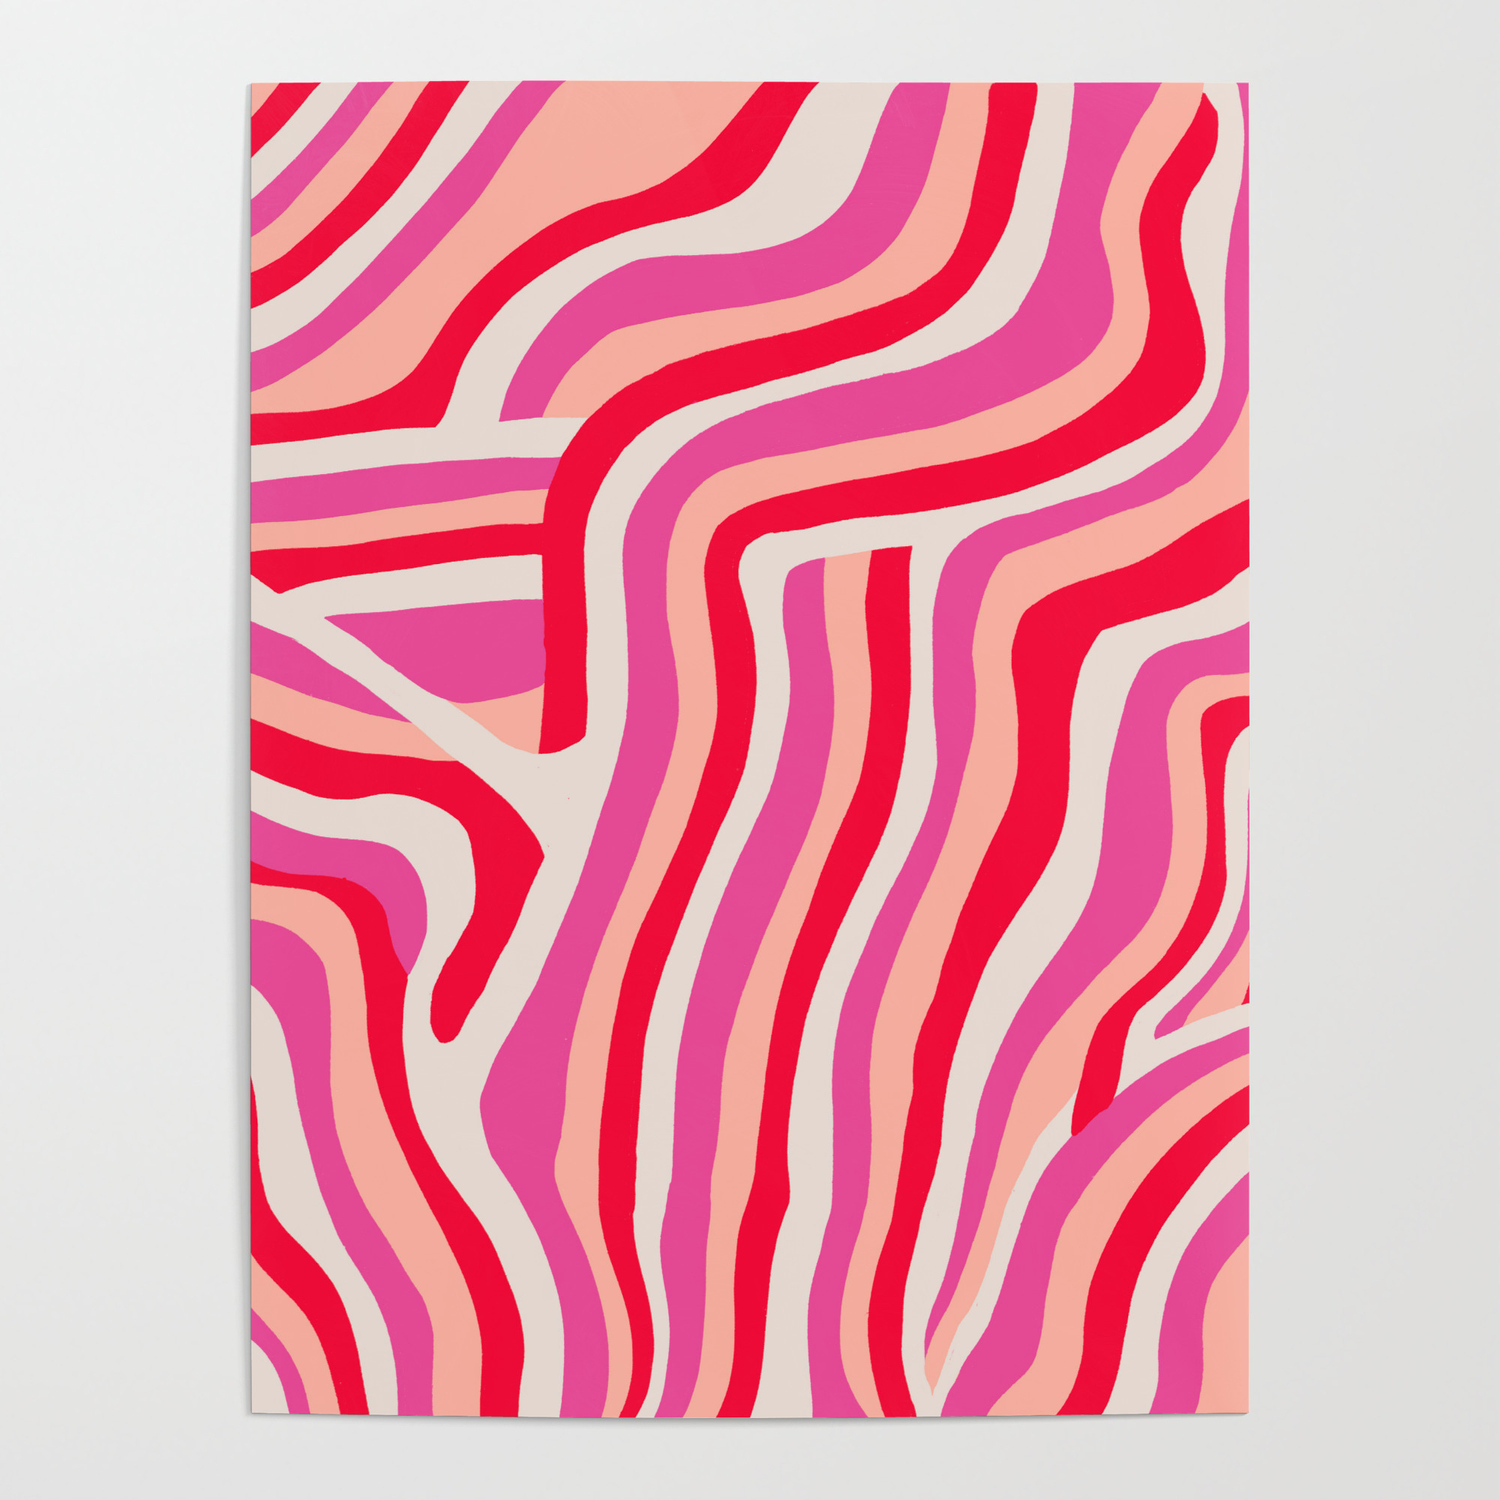 pink zebra stripes Poster